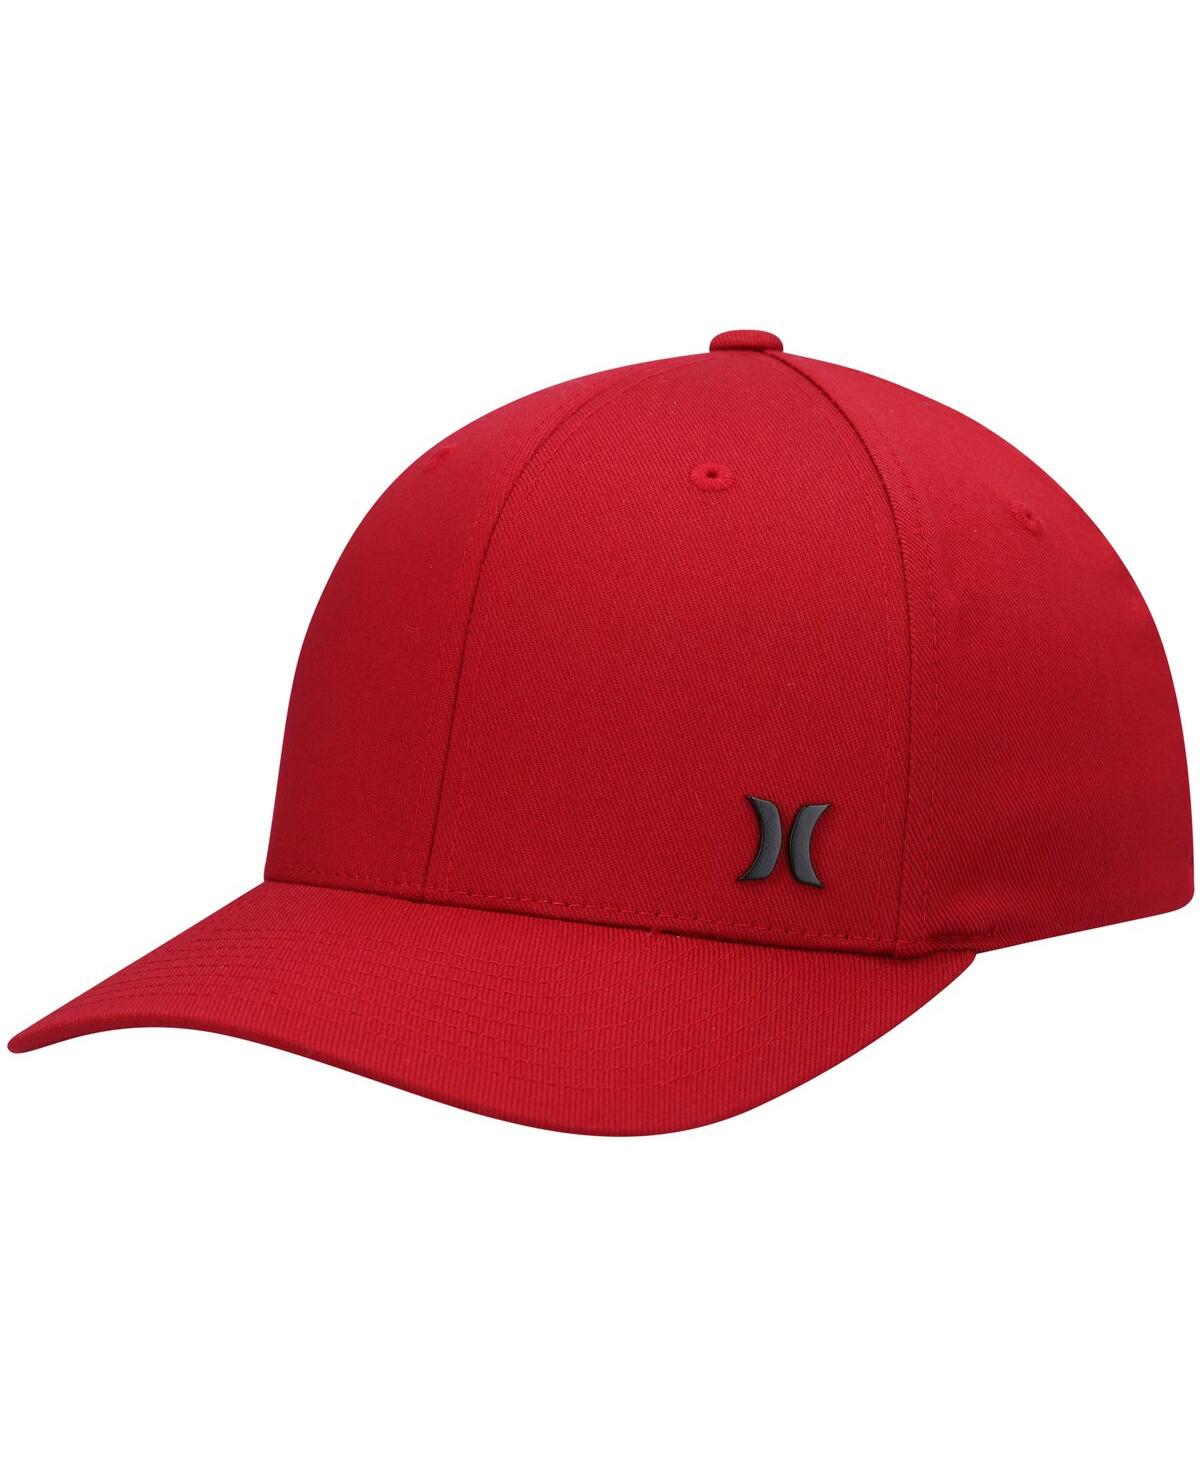 Hurley Men's  Red Iron Corp Flex Hat